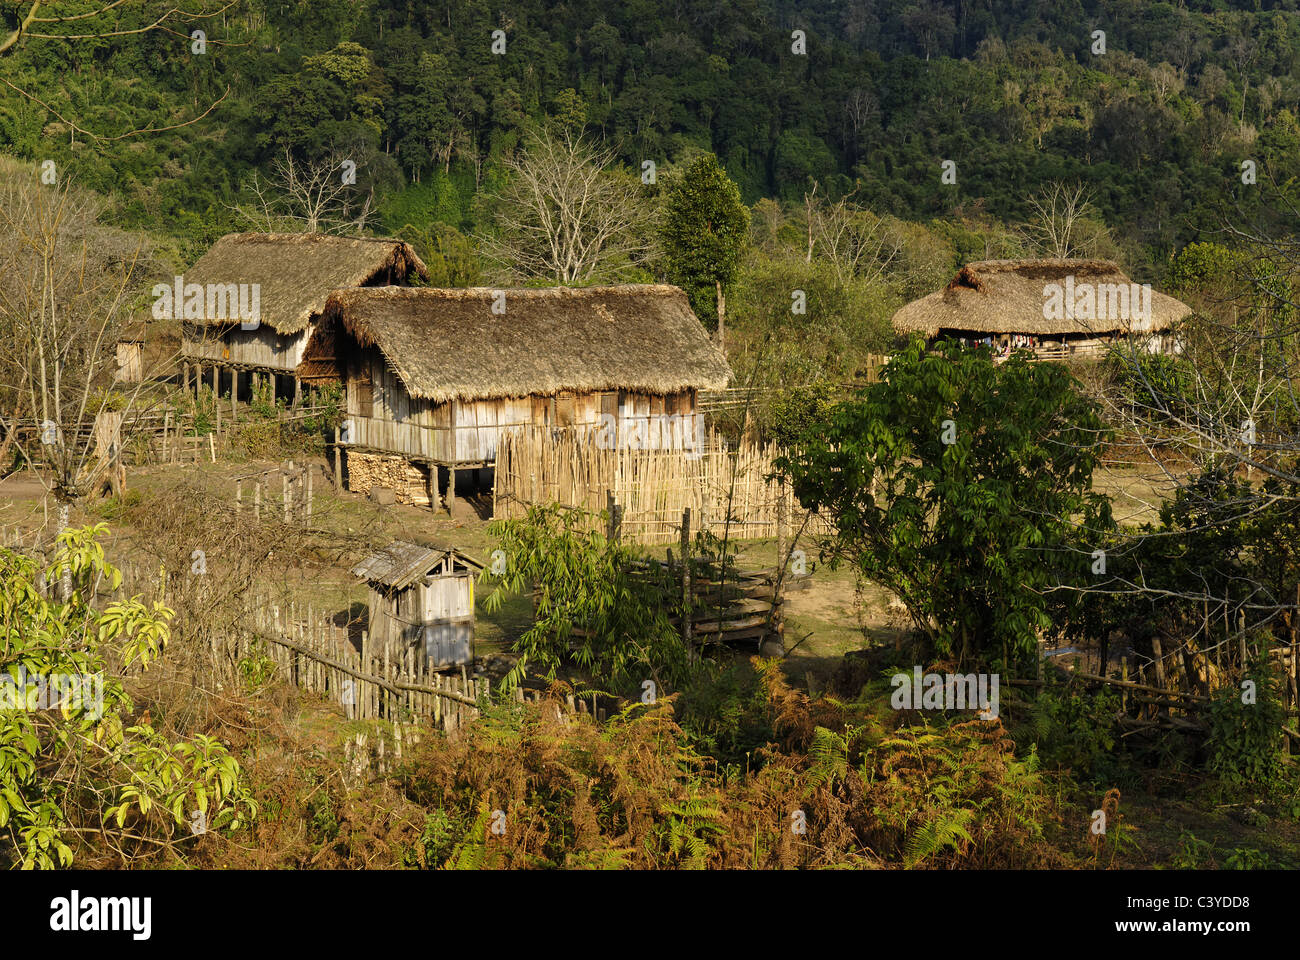 Birma, Rawang people, minority, Kachin State, Burma, Myanmar, Asian, Asia, bamboo, farmhouse, farmhouses, farm, farms, building, Stock Photo